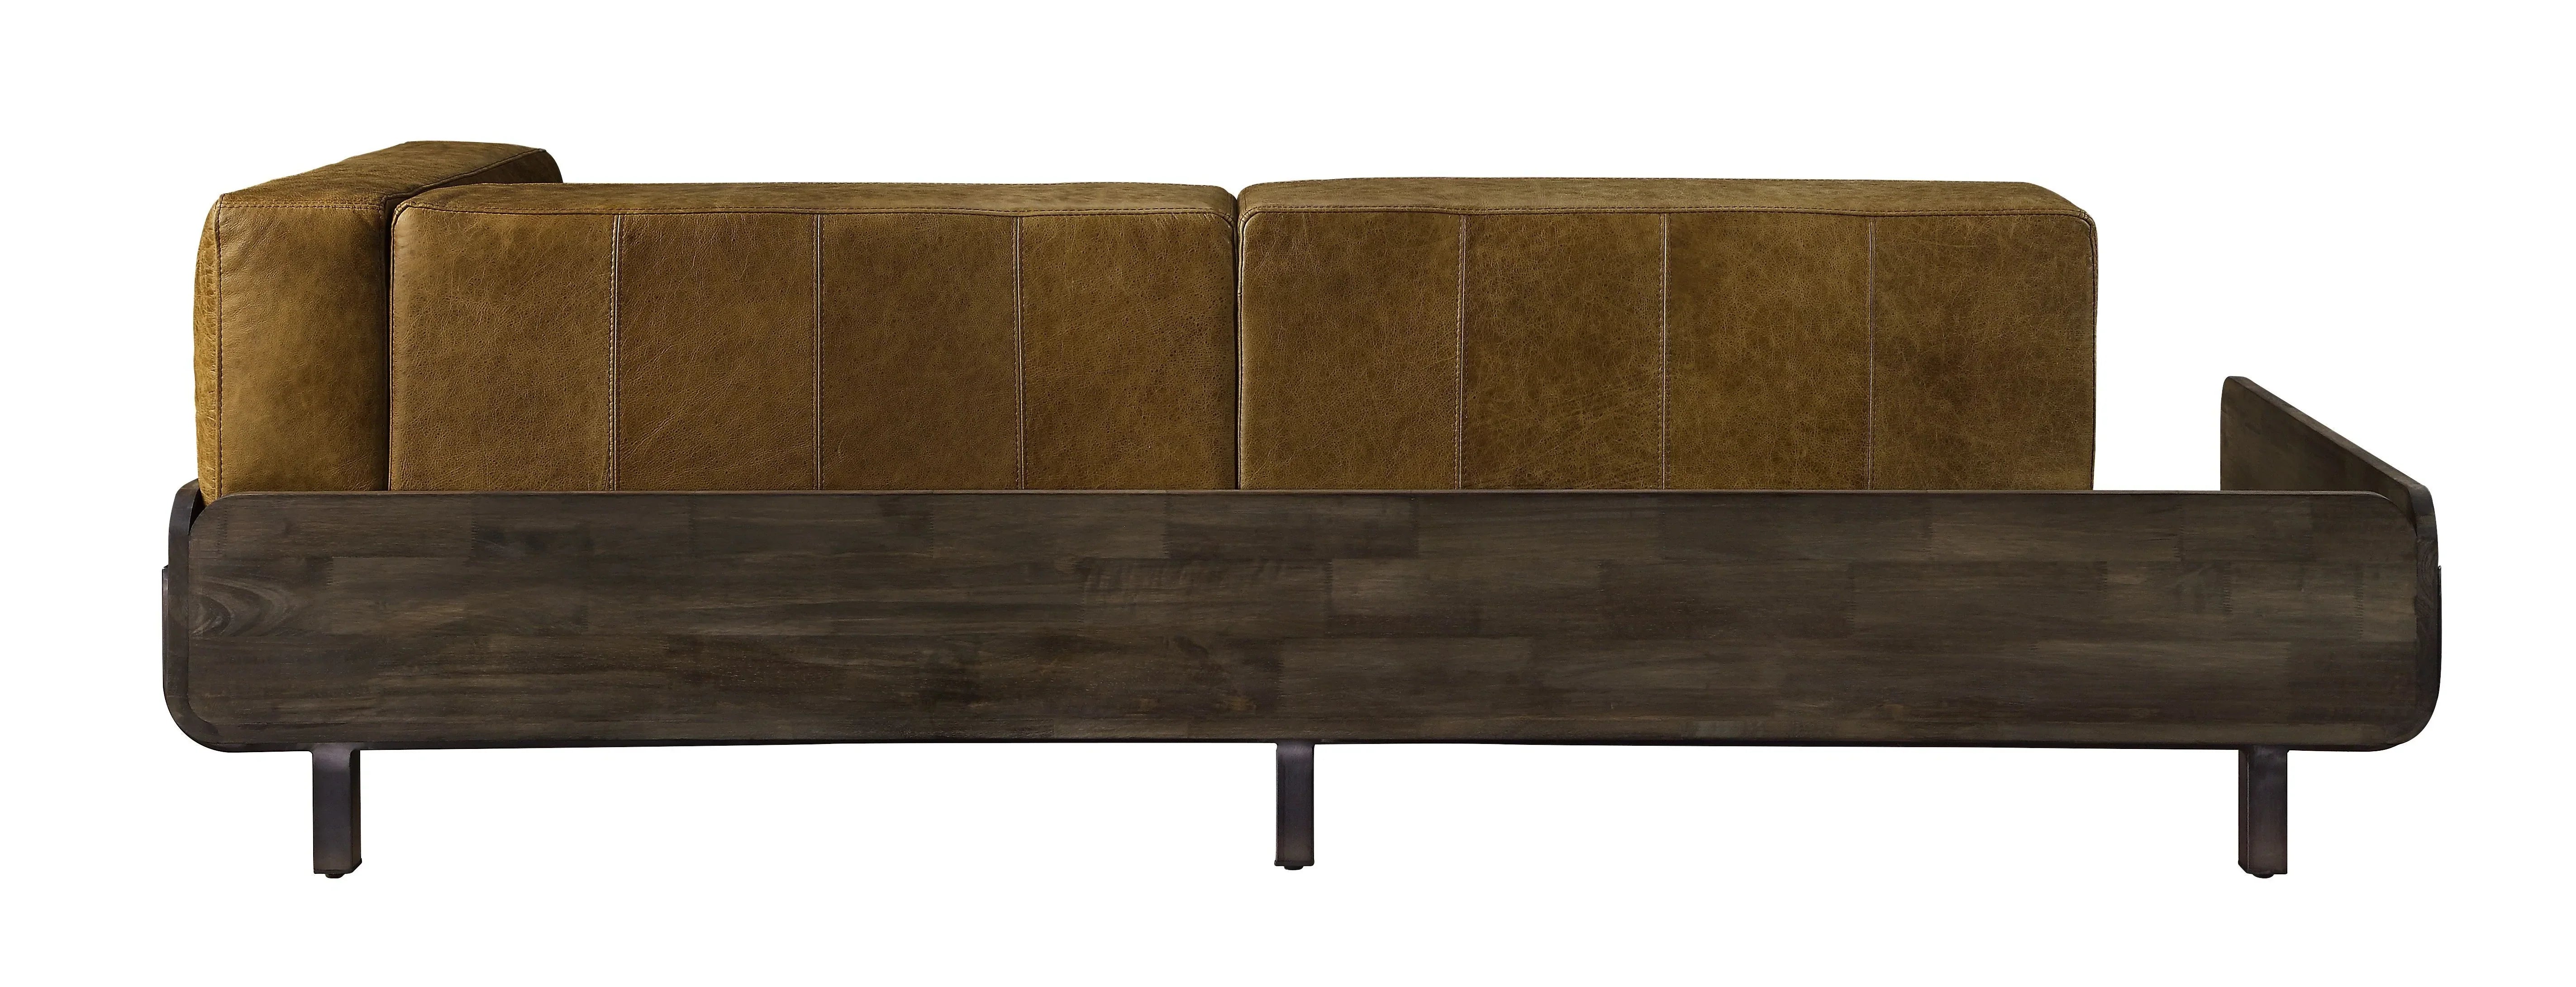 Blanca Chestnut Top Grain Leather & Rustic Oak Sofa Model 56500 By ACME Furniture